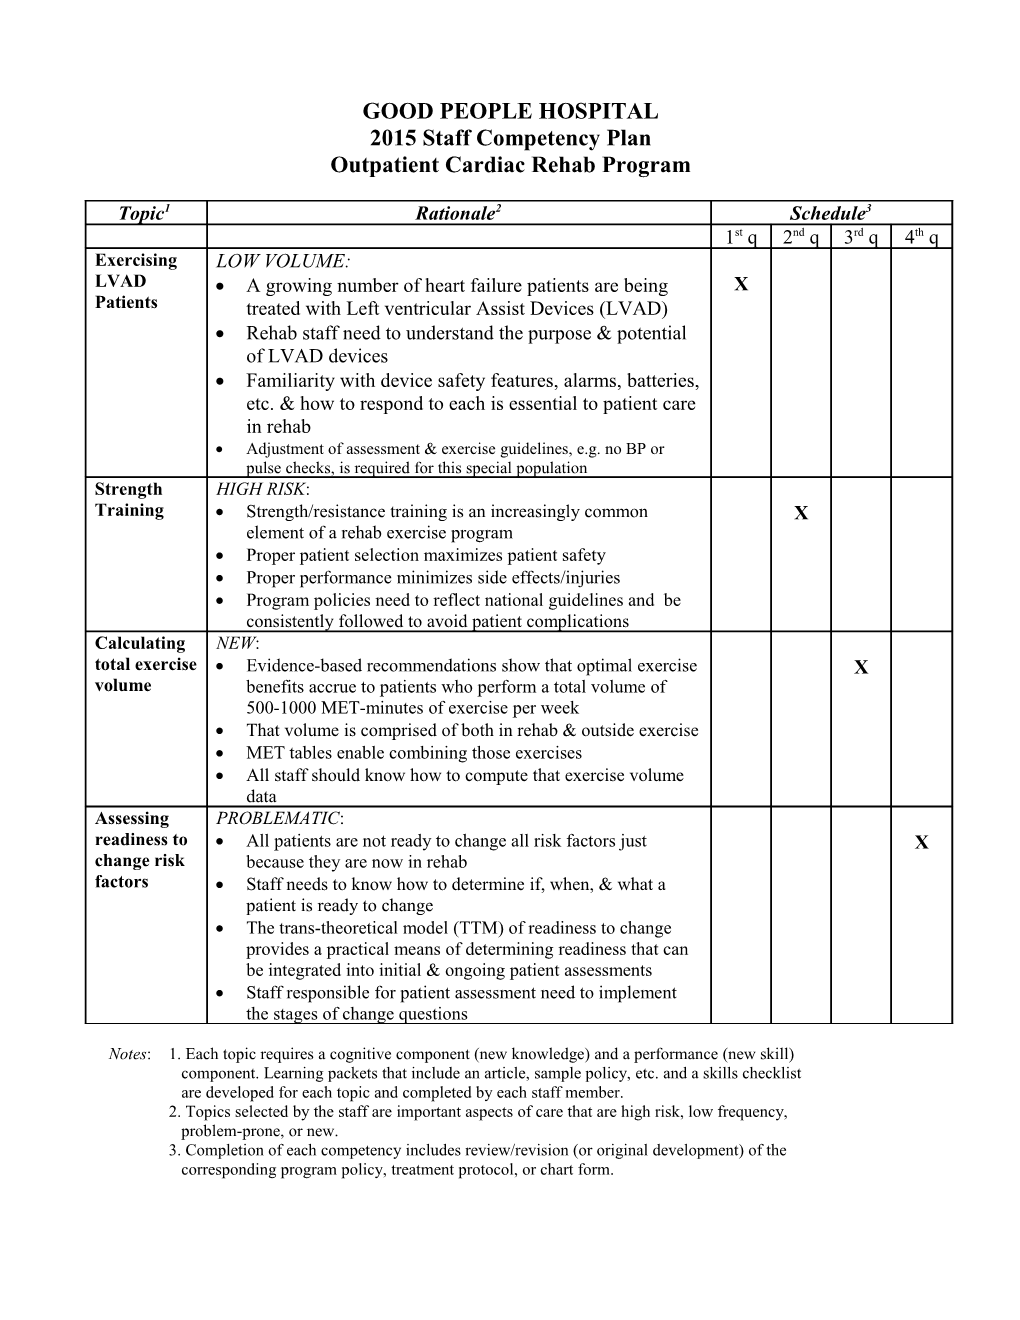 2006 Staff Competency Plan